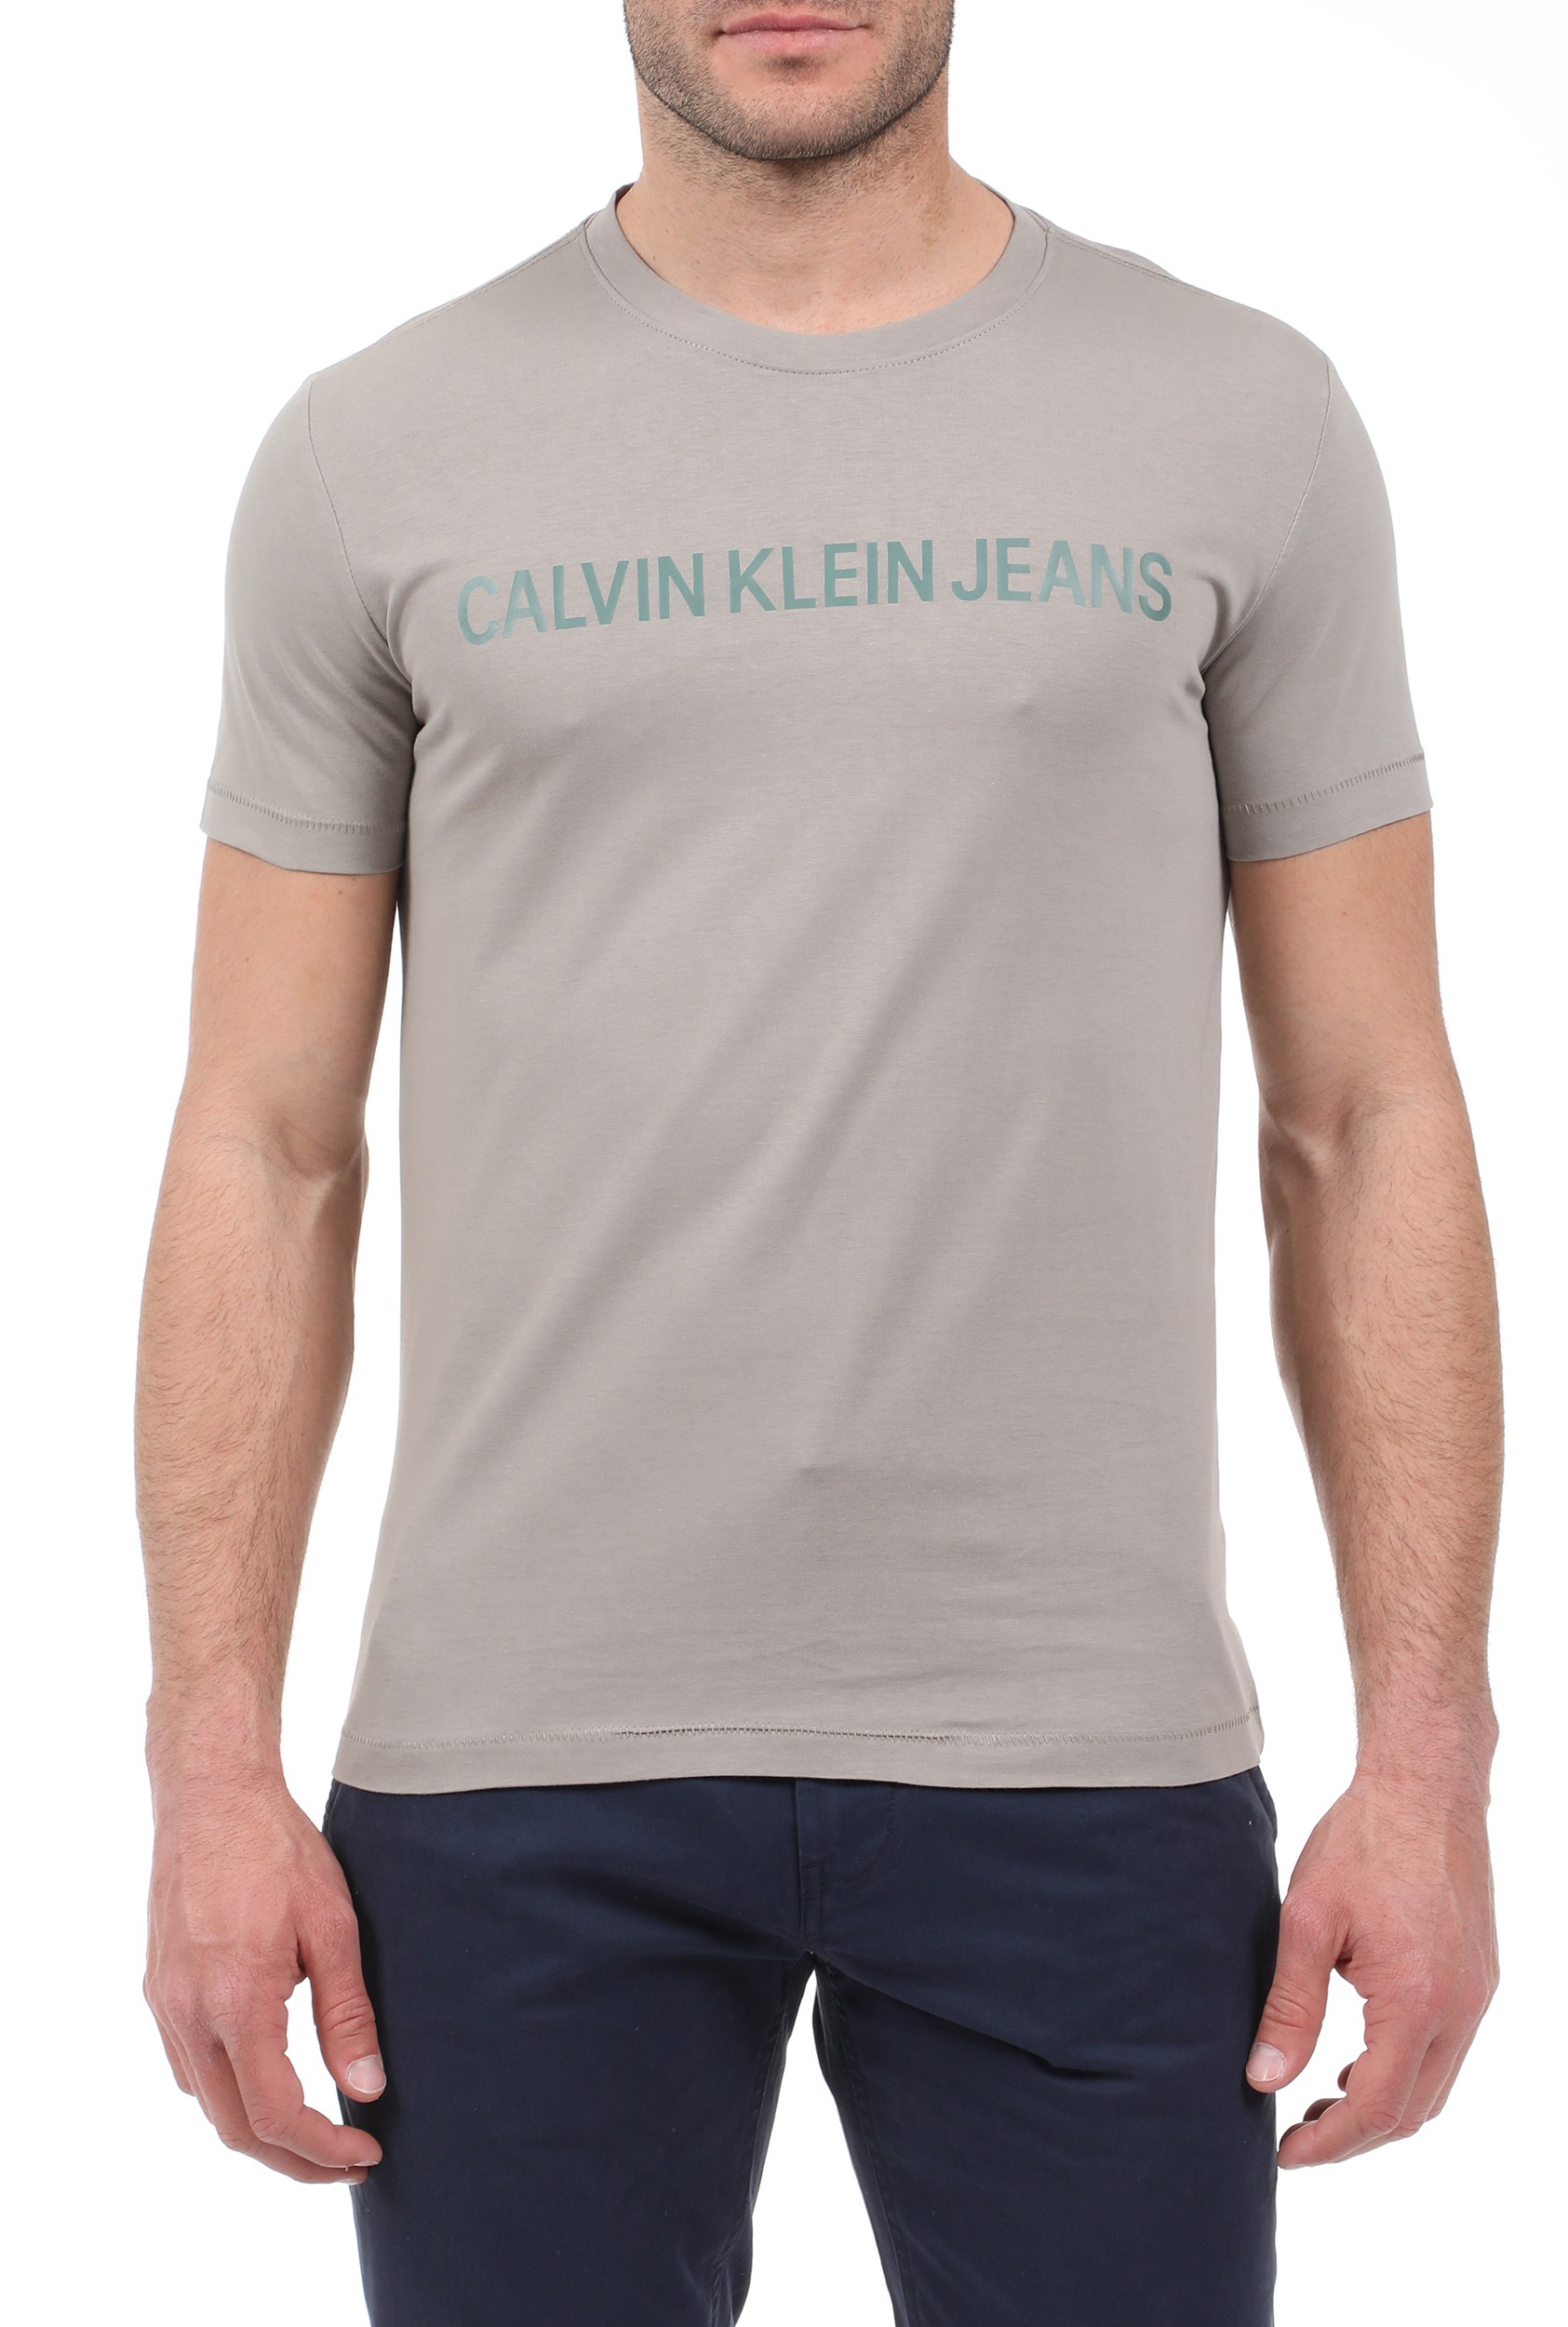 CALVIN KLEIN JEANS - Ανδρικό t-shirt CALVIN KLEIN JEANS μπεζ